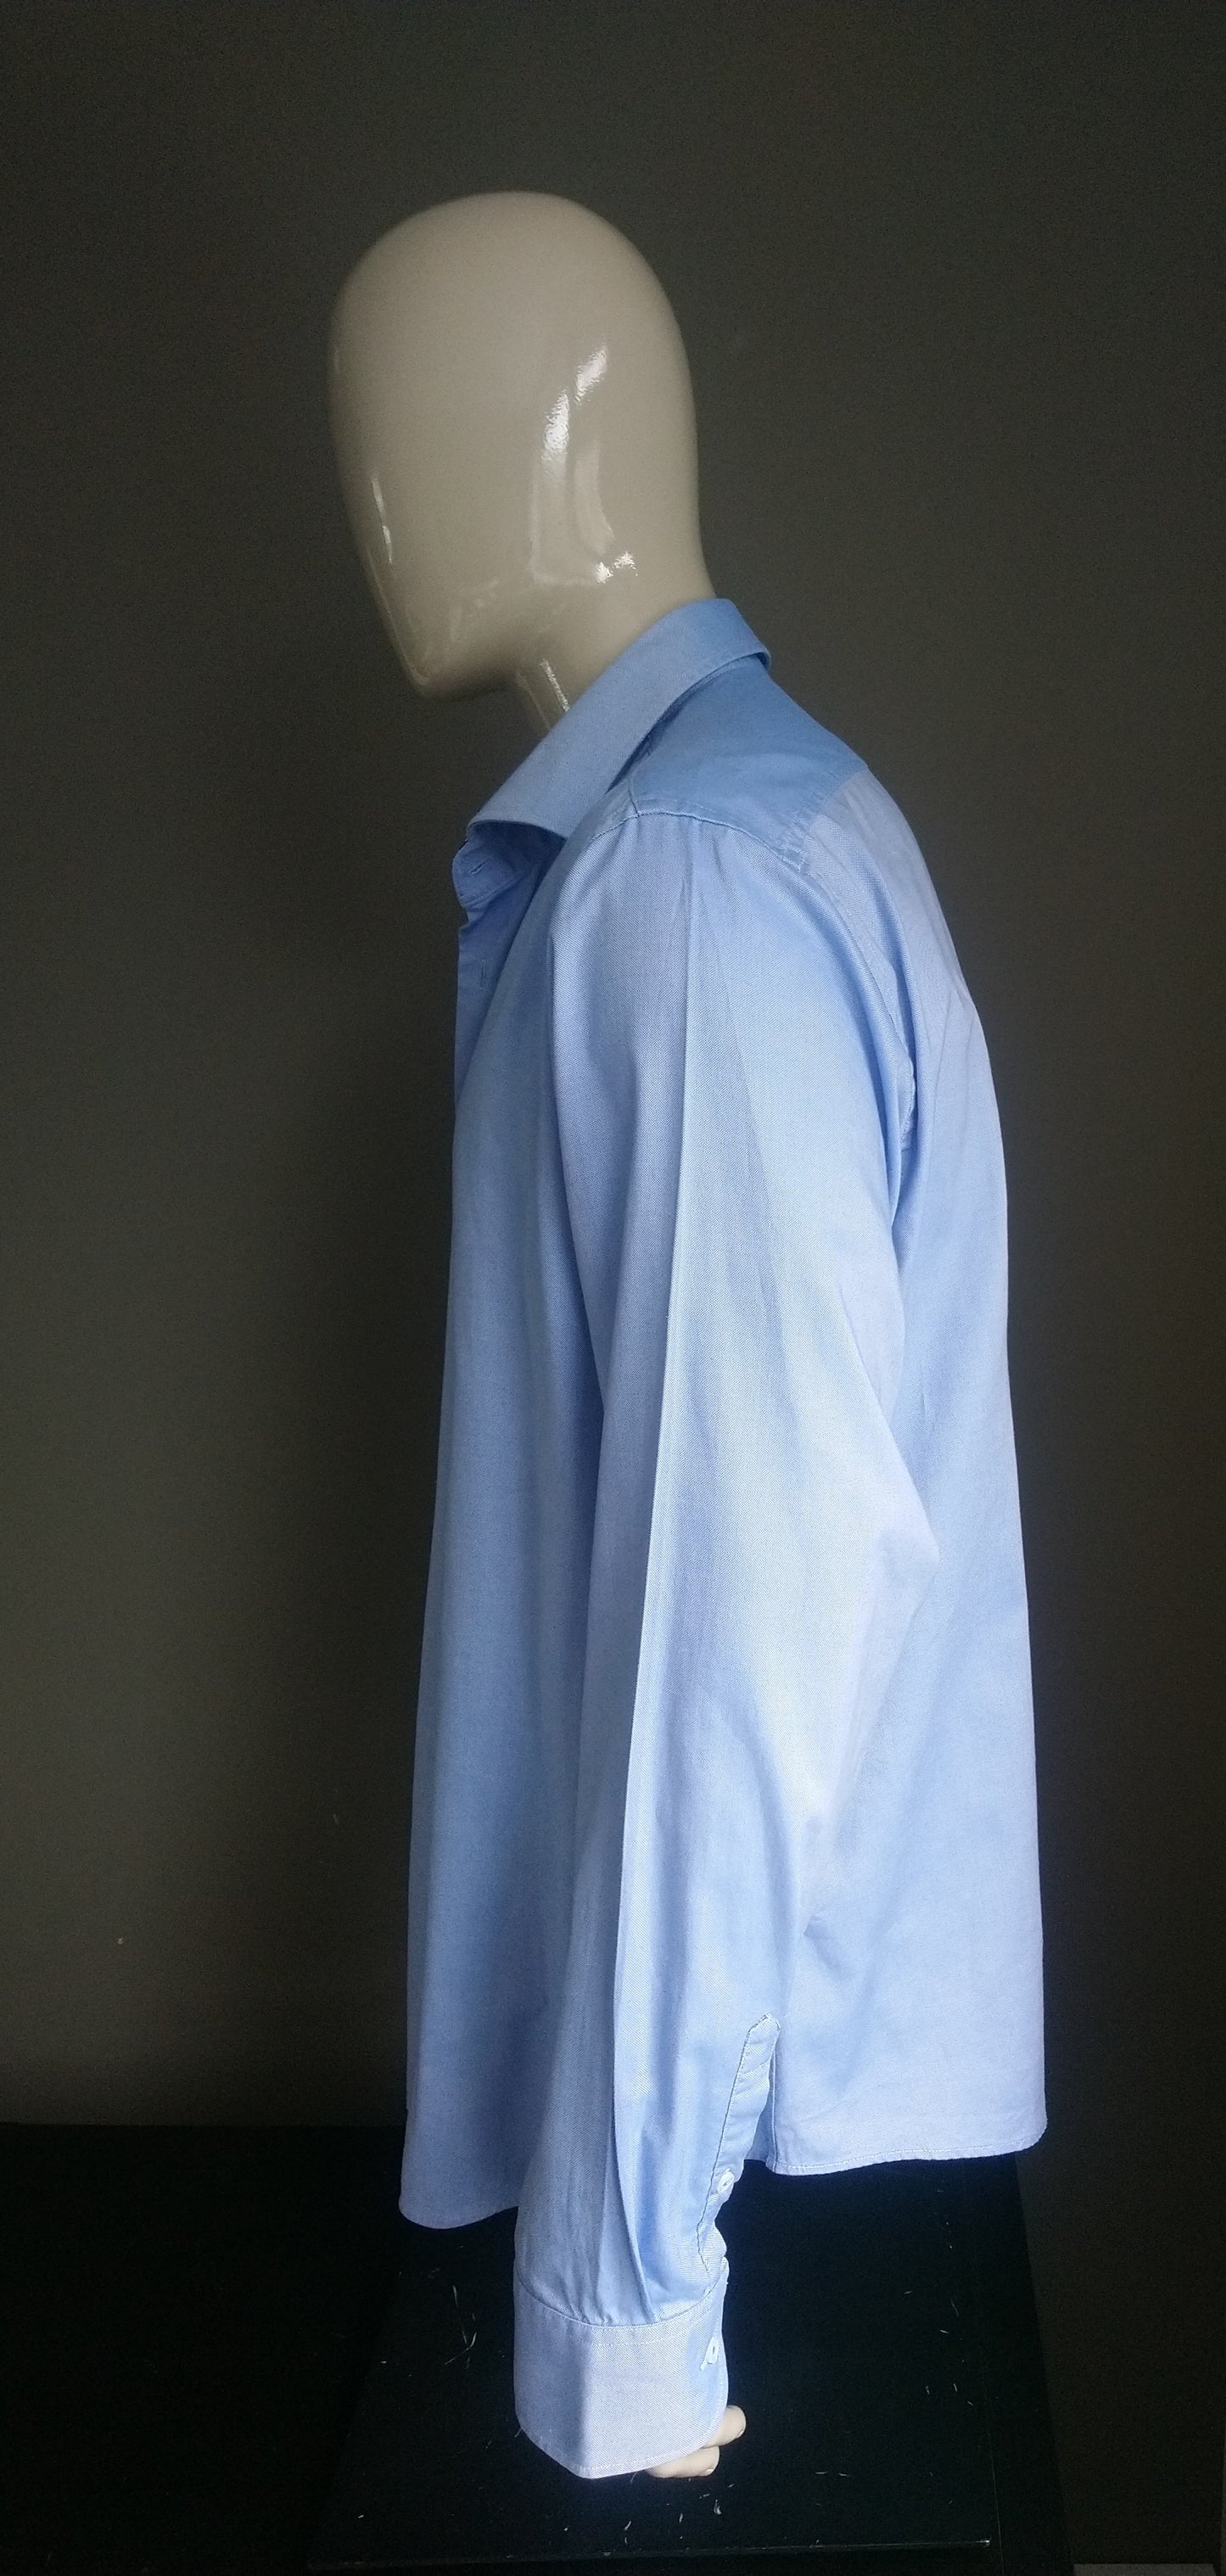 The Blue Print overhemd. Blauw Wit motief. Maat 3XL / XXXL.